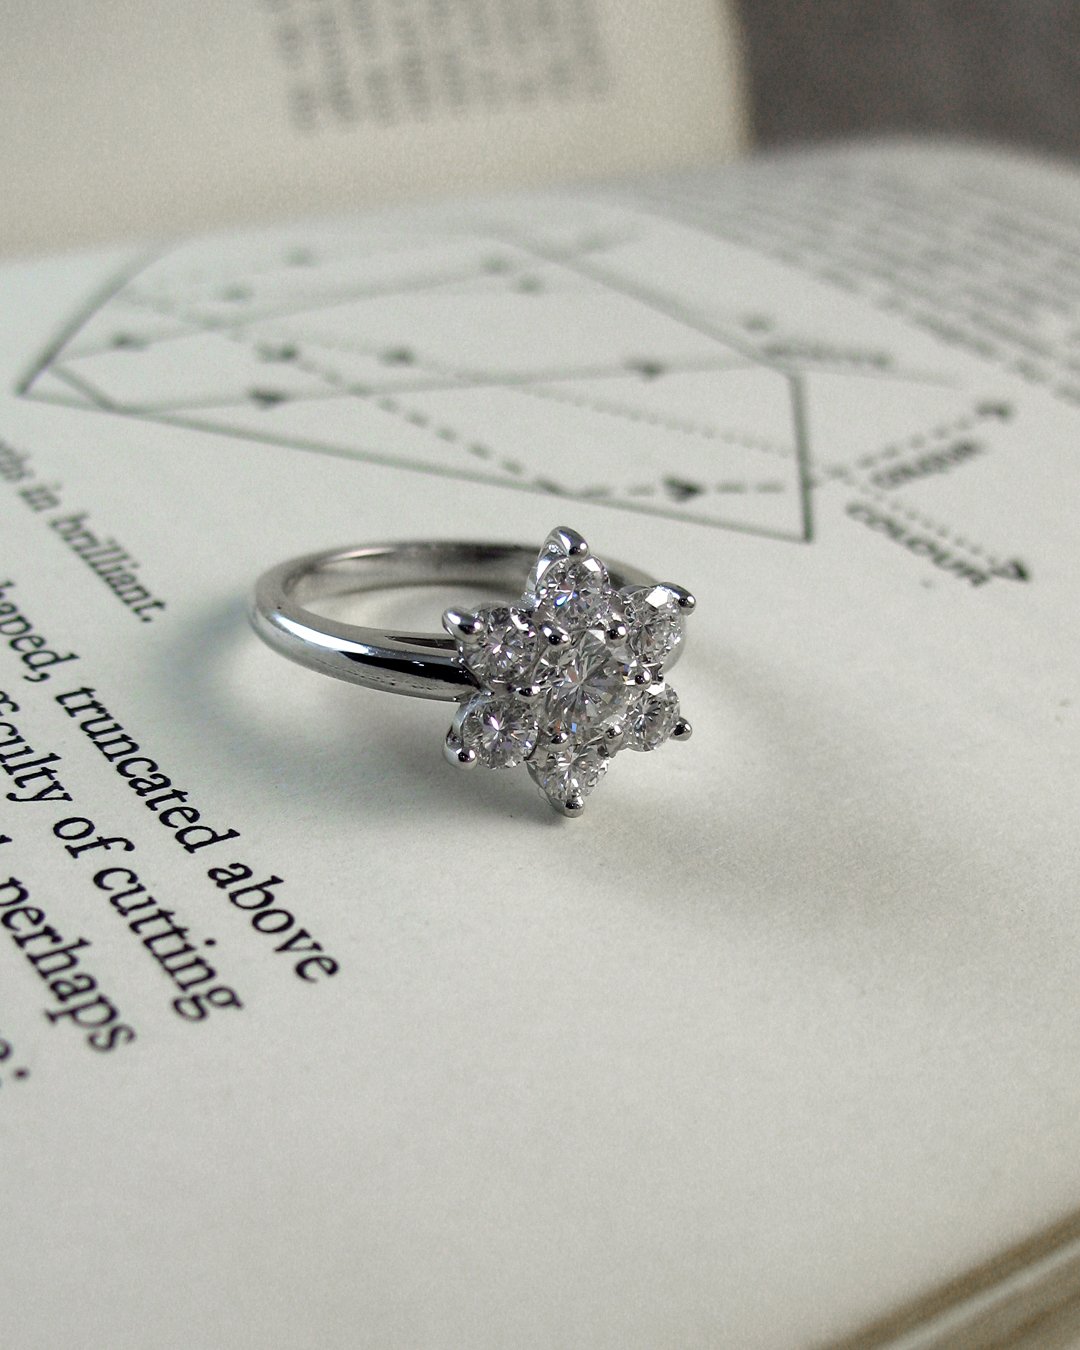 Simple bespoke diamond cluster ring set in platinum.⠀